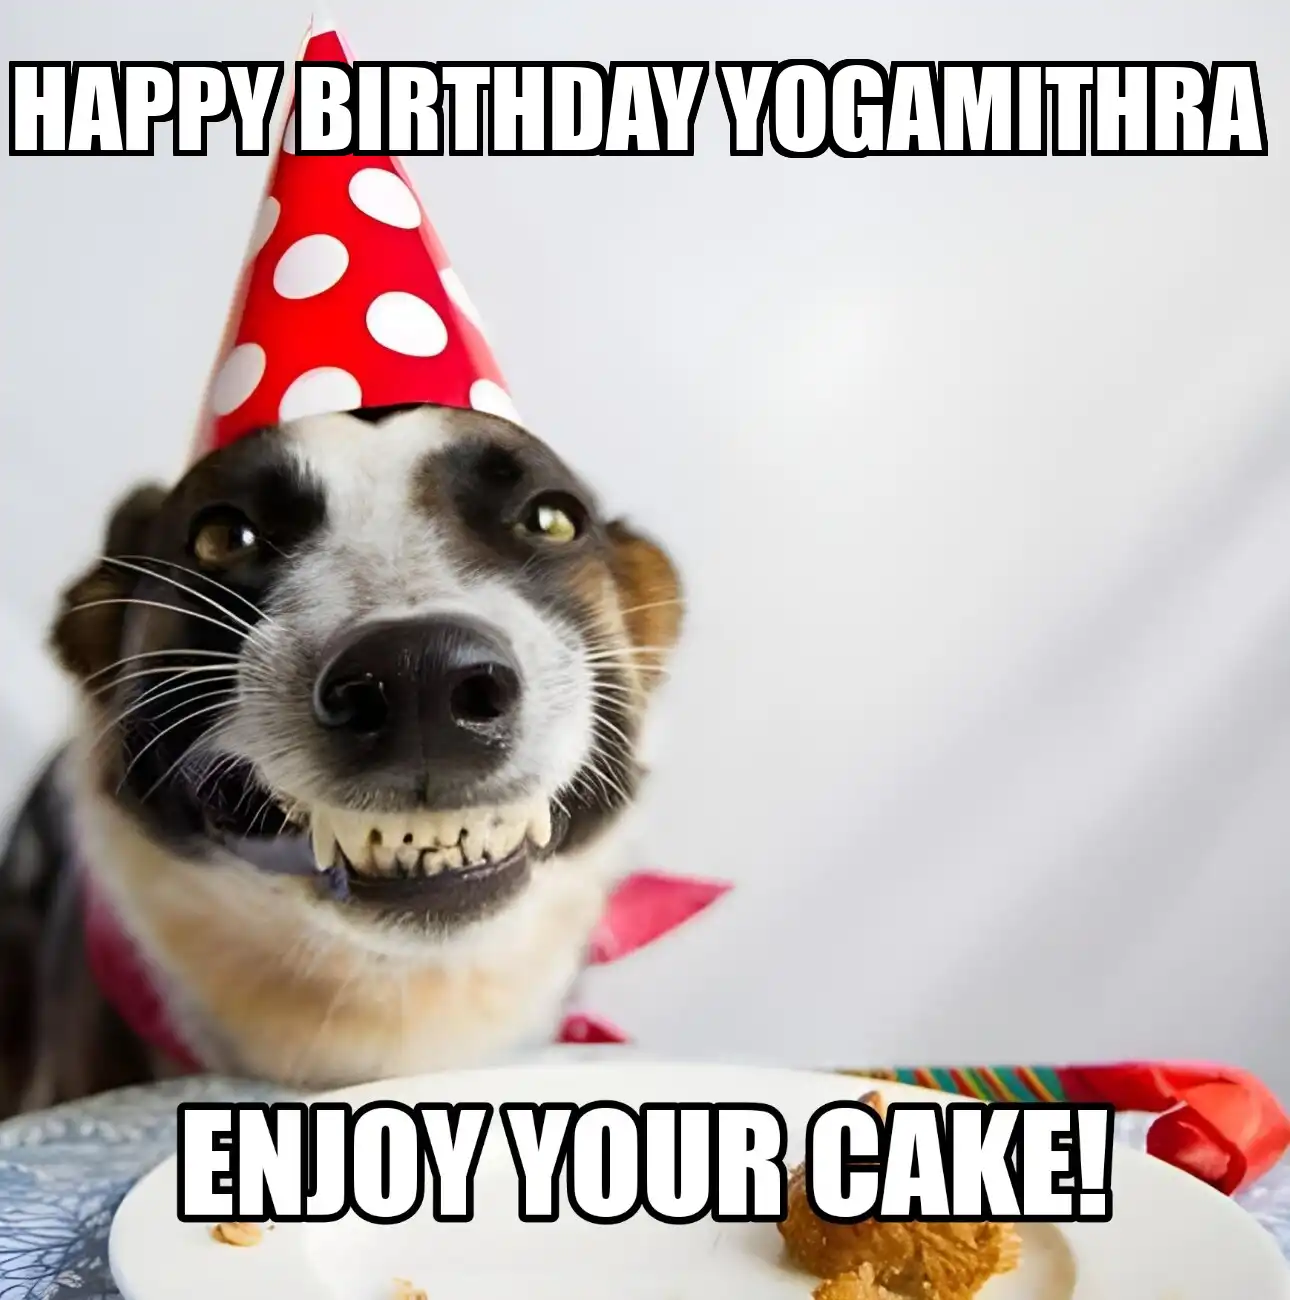 Happy Birthday Yogamithra Enjoy Your Cake Dog Meme